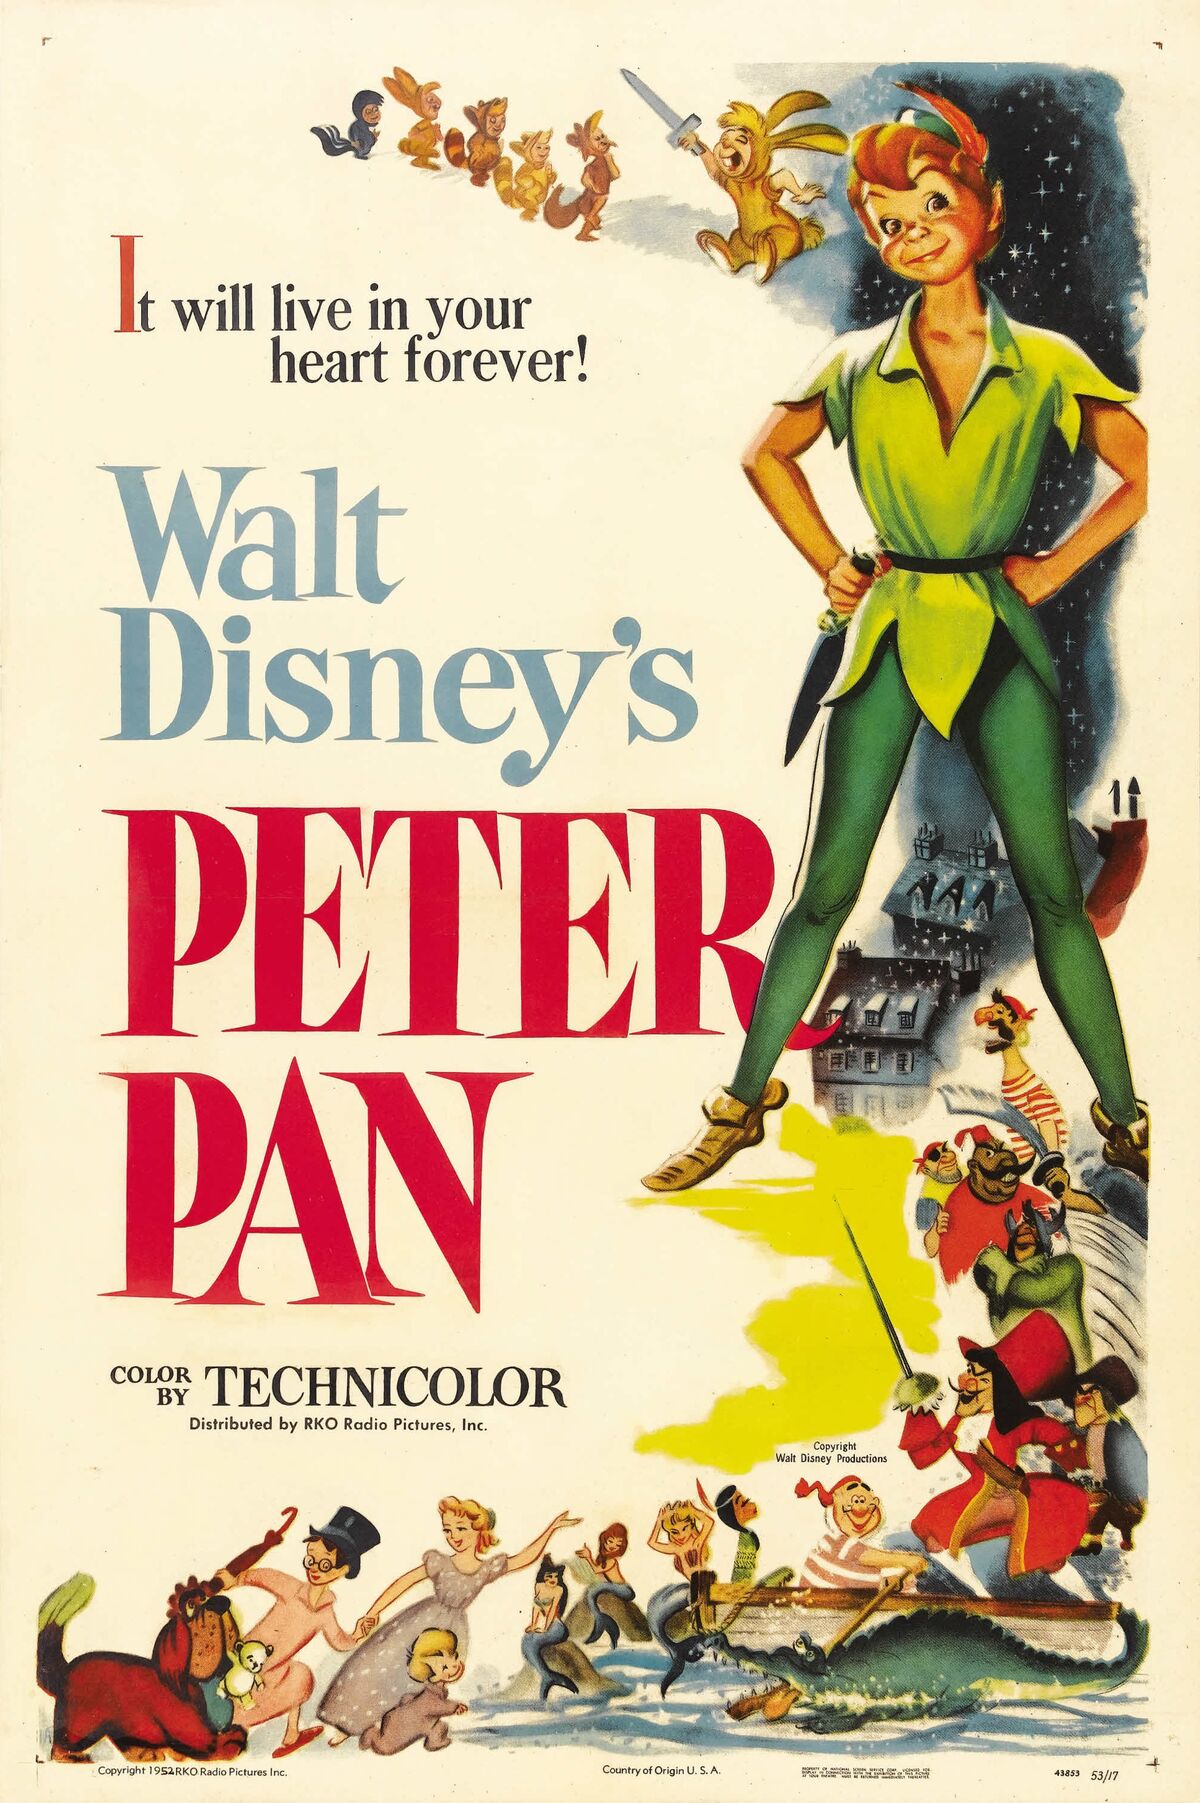 Peter Pan (1988 film) - Wikipedia